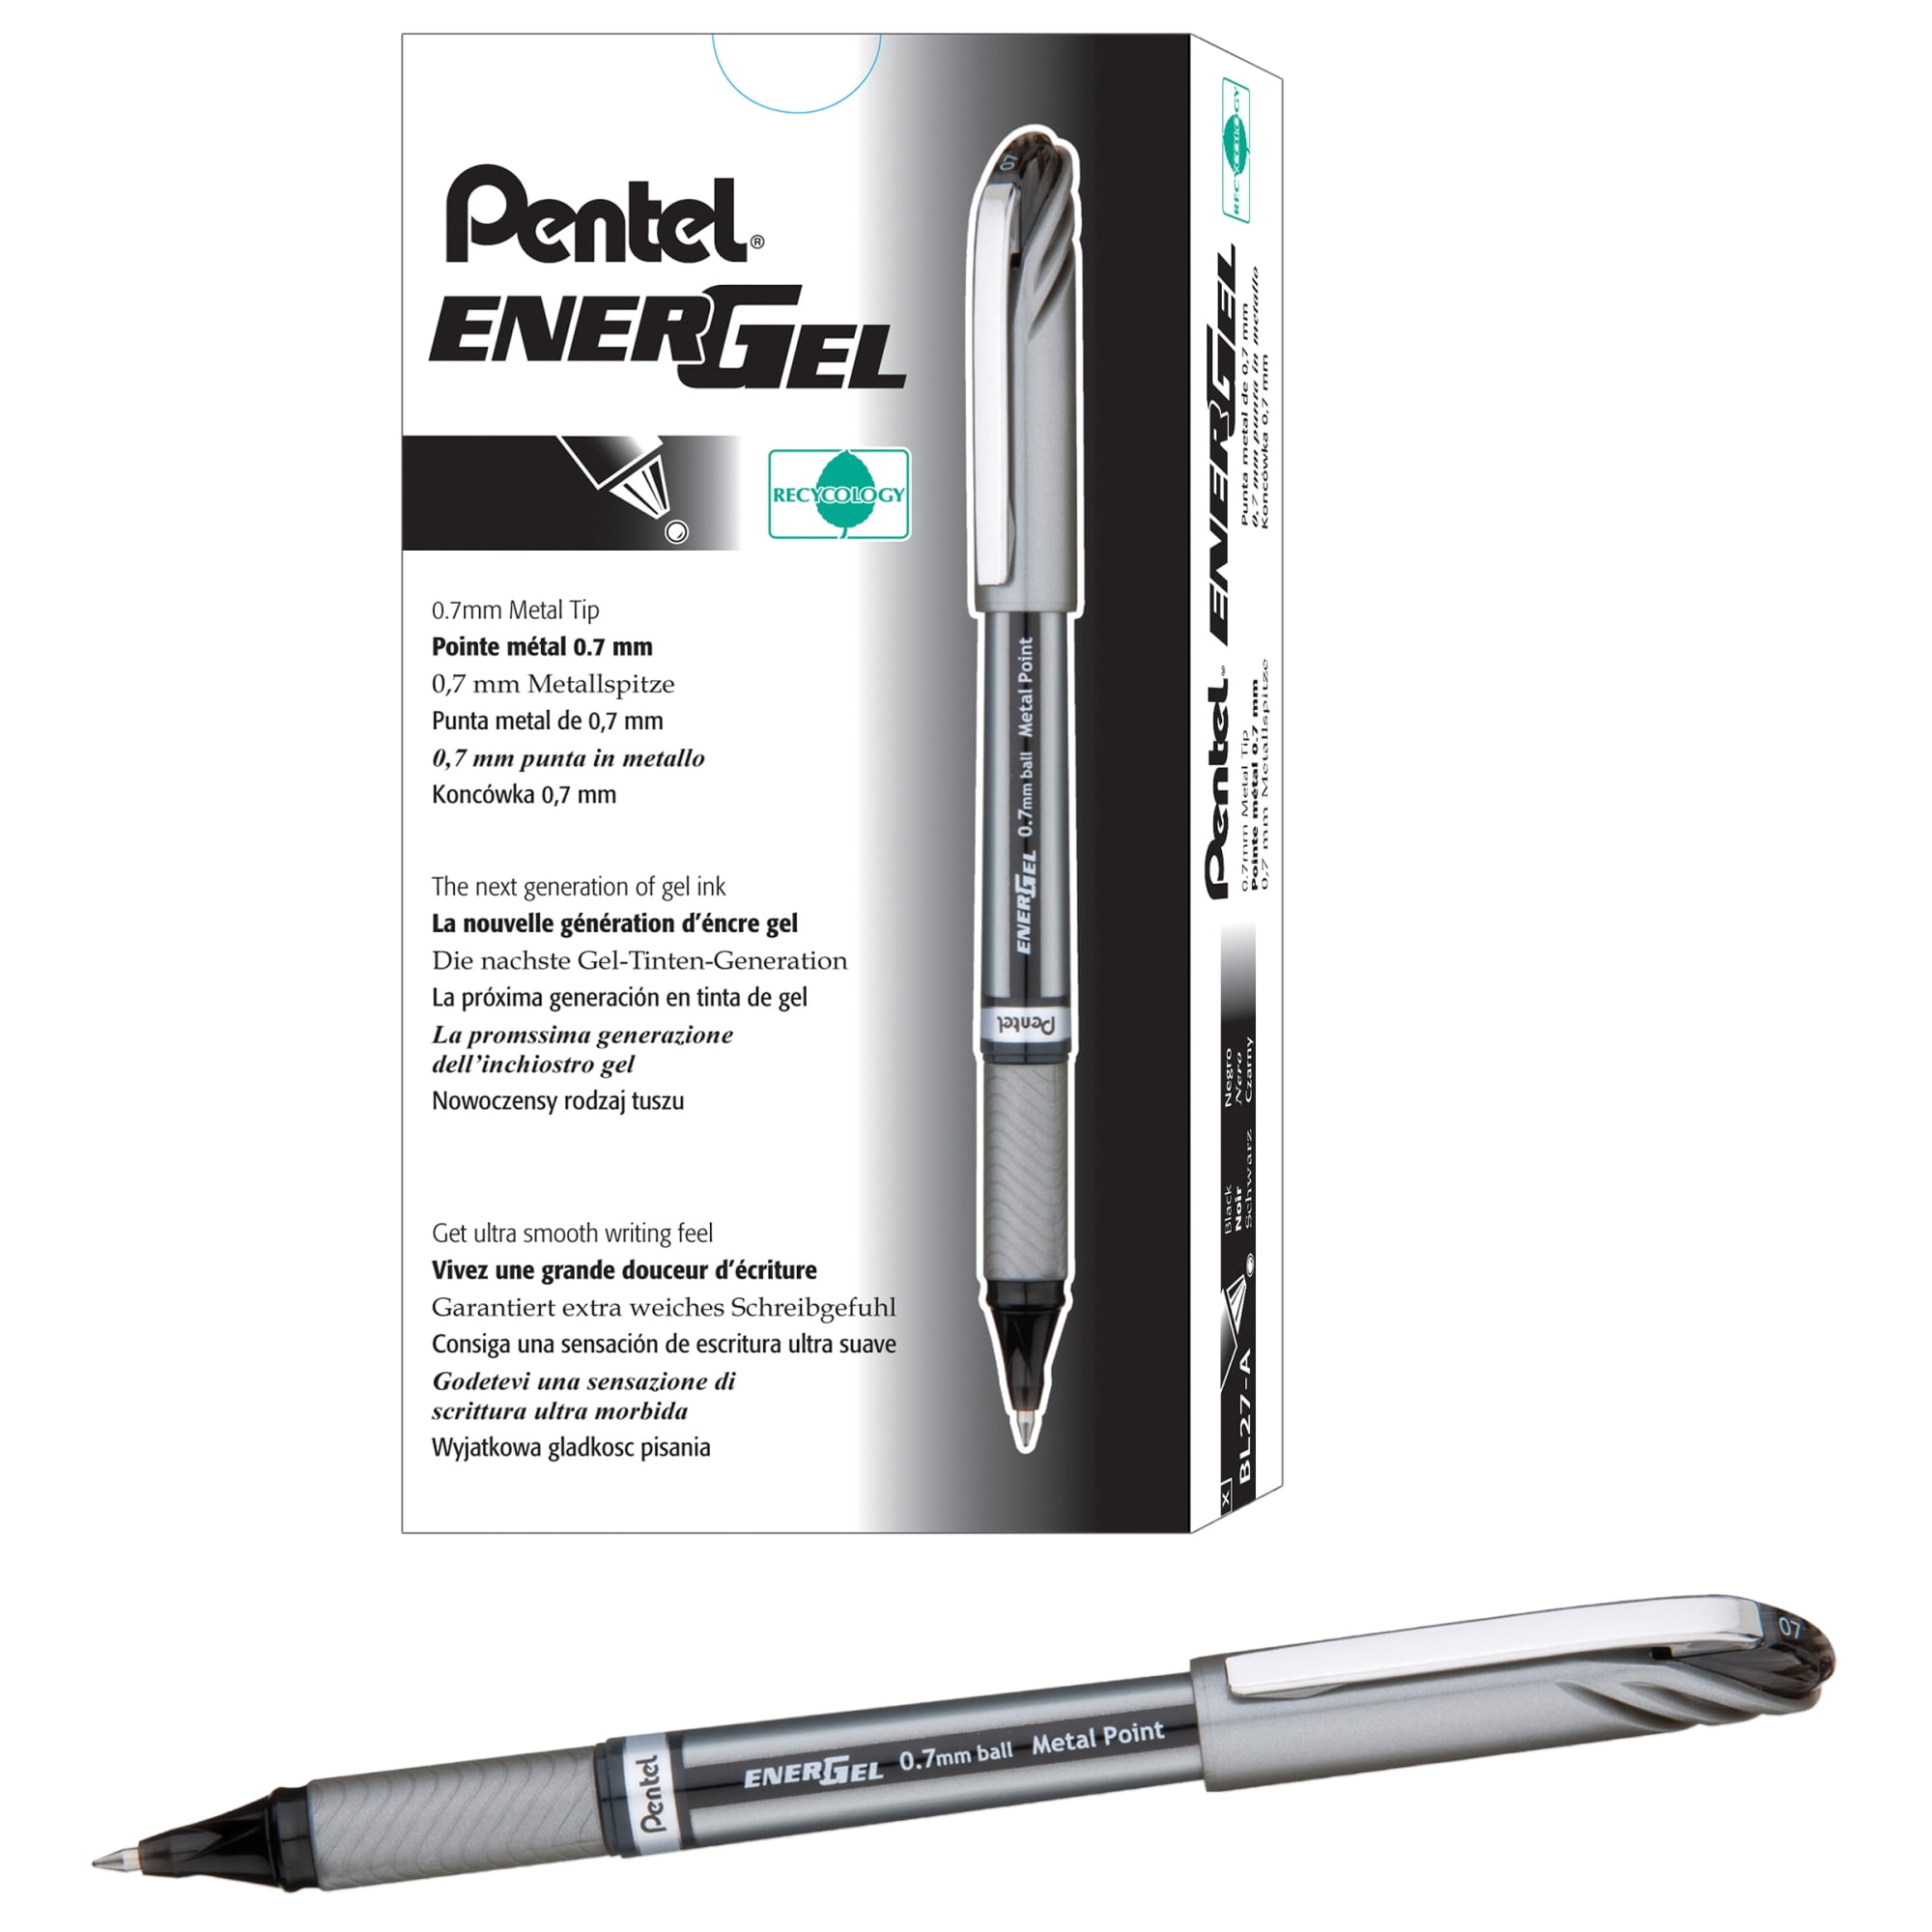 Pentel Energel NV Pen - Studio Calico